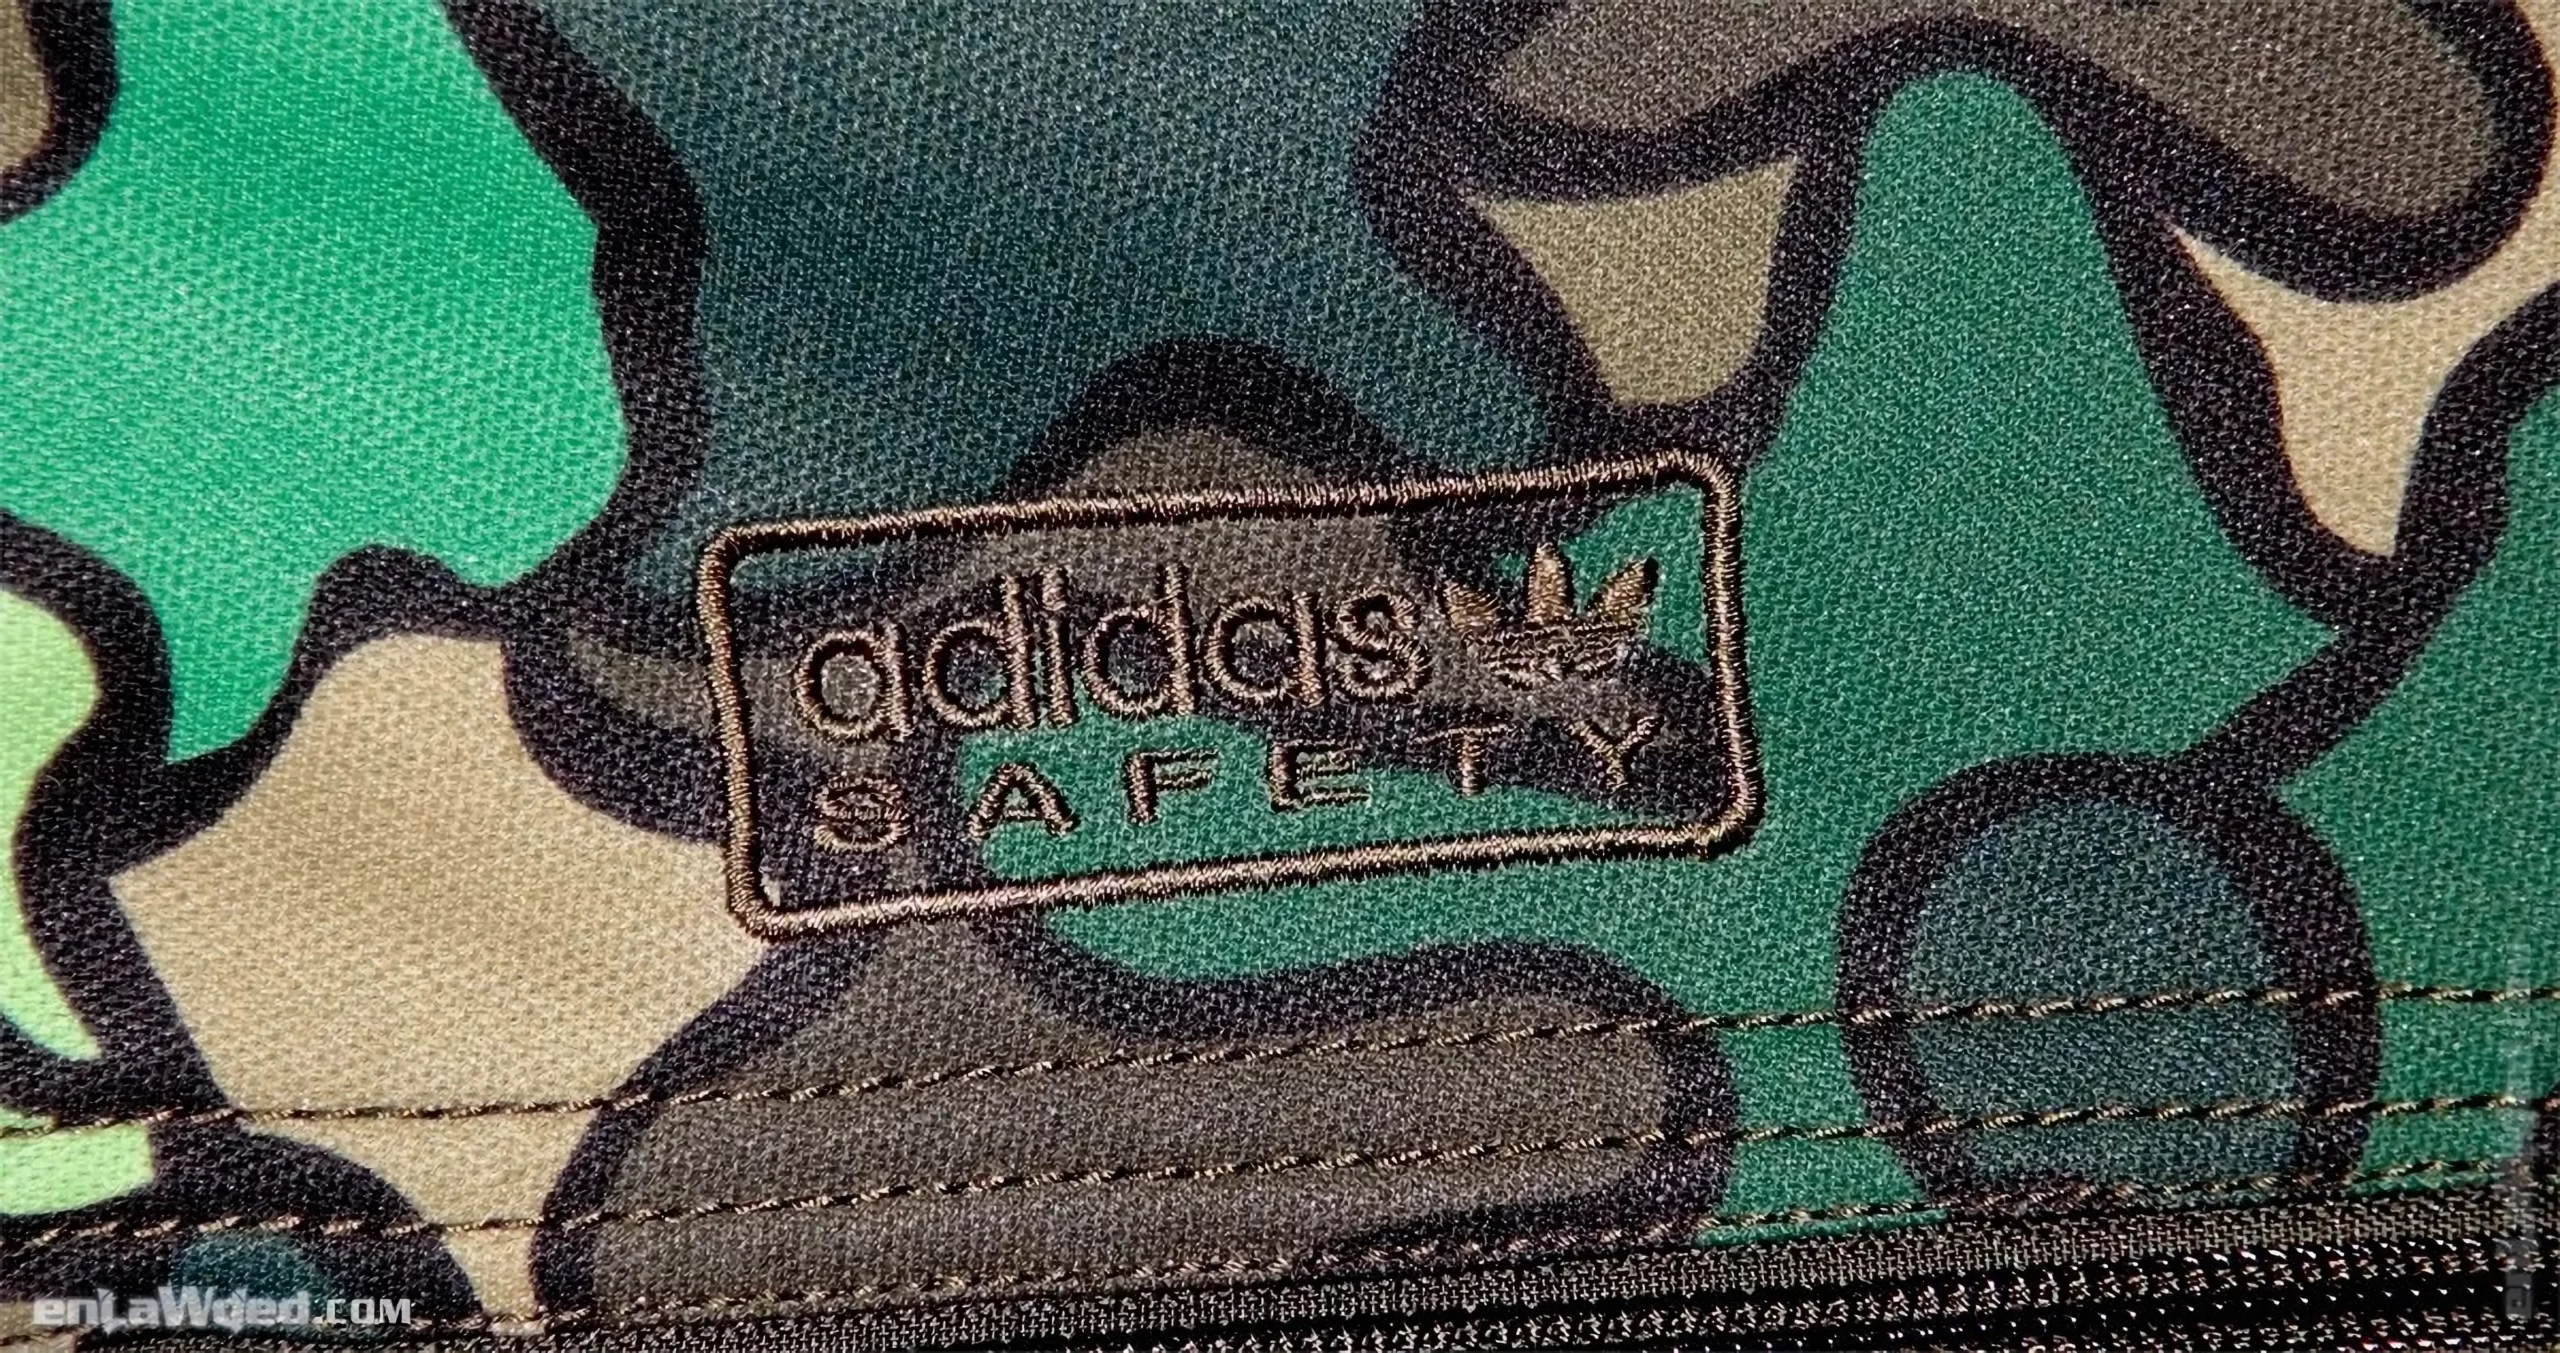 Men’s 2006 Adidas Originals Green Safety Camo Track Top: Resourceful (EnLawded.com file #lmchig7k3zx3aj1l13d)